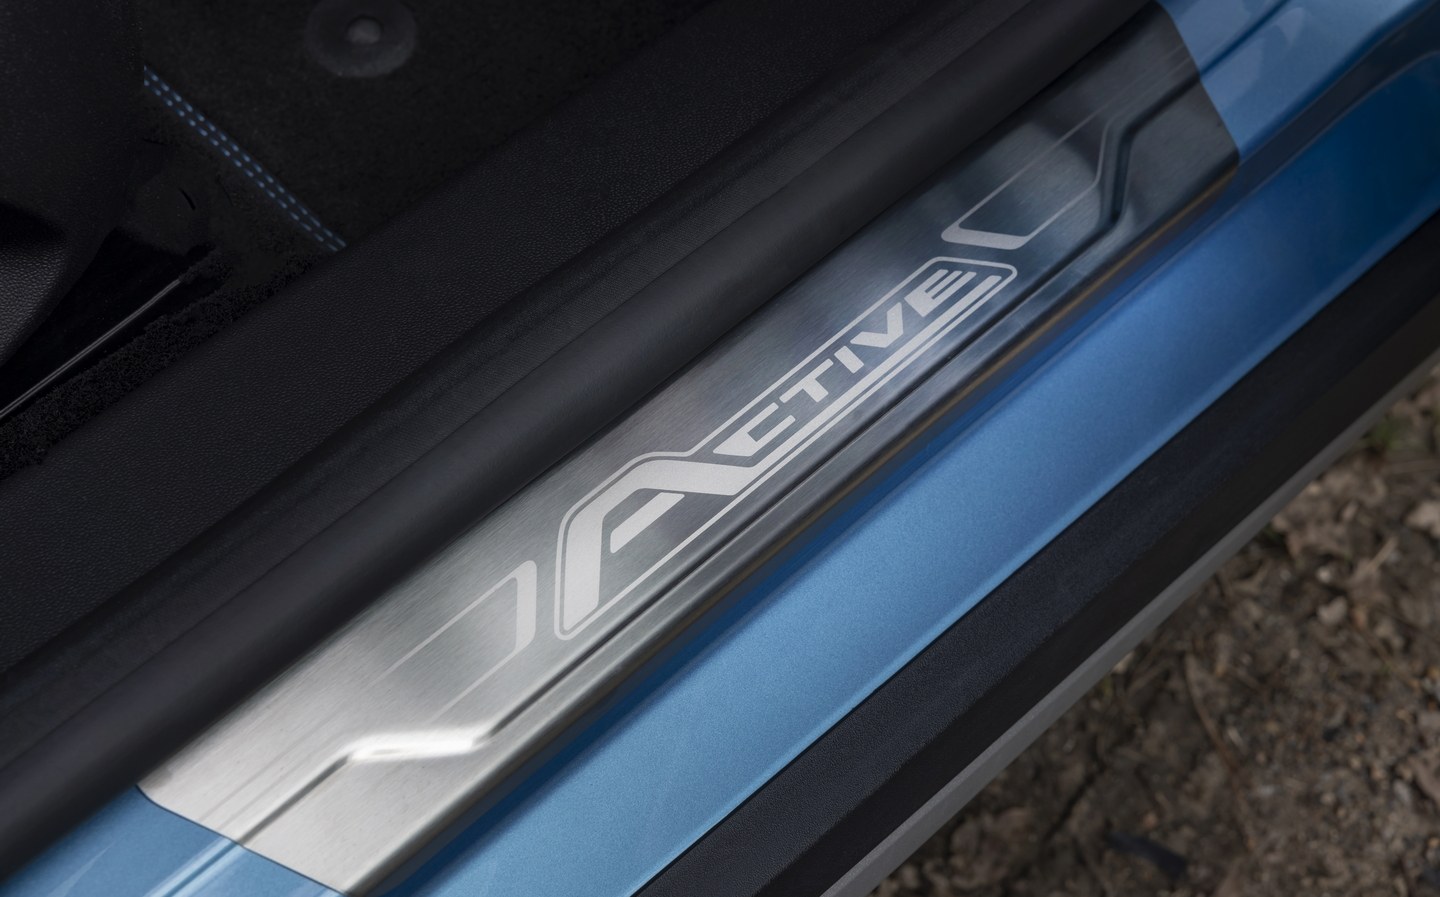 Ford Fiesta Active 2022 review: Evolution trumps revolution